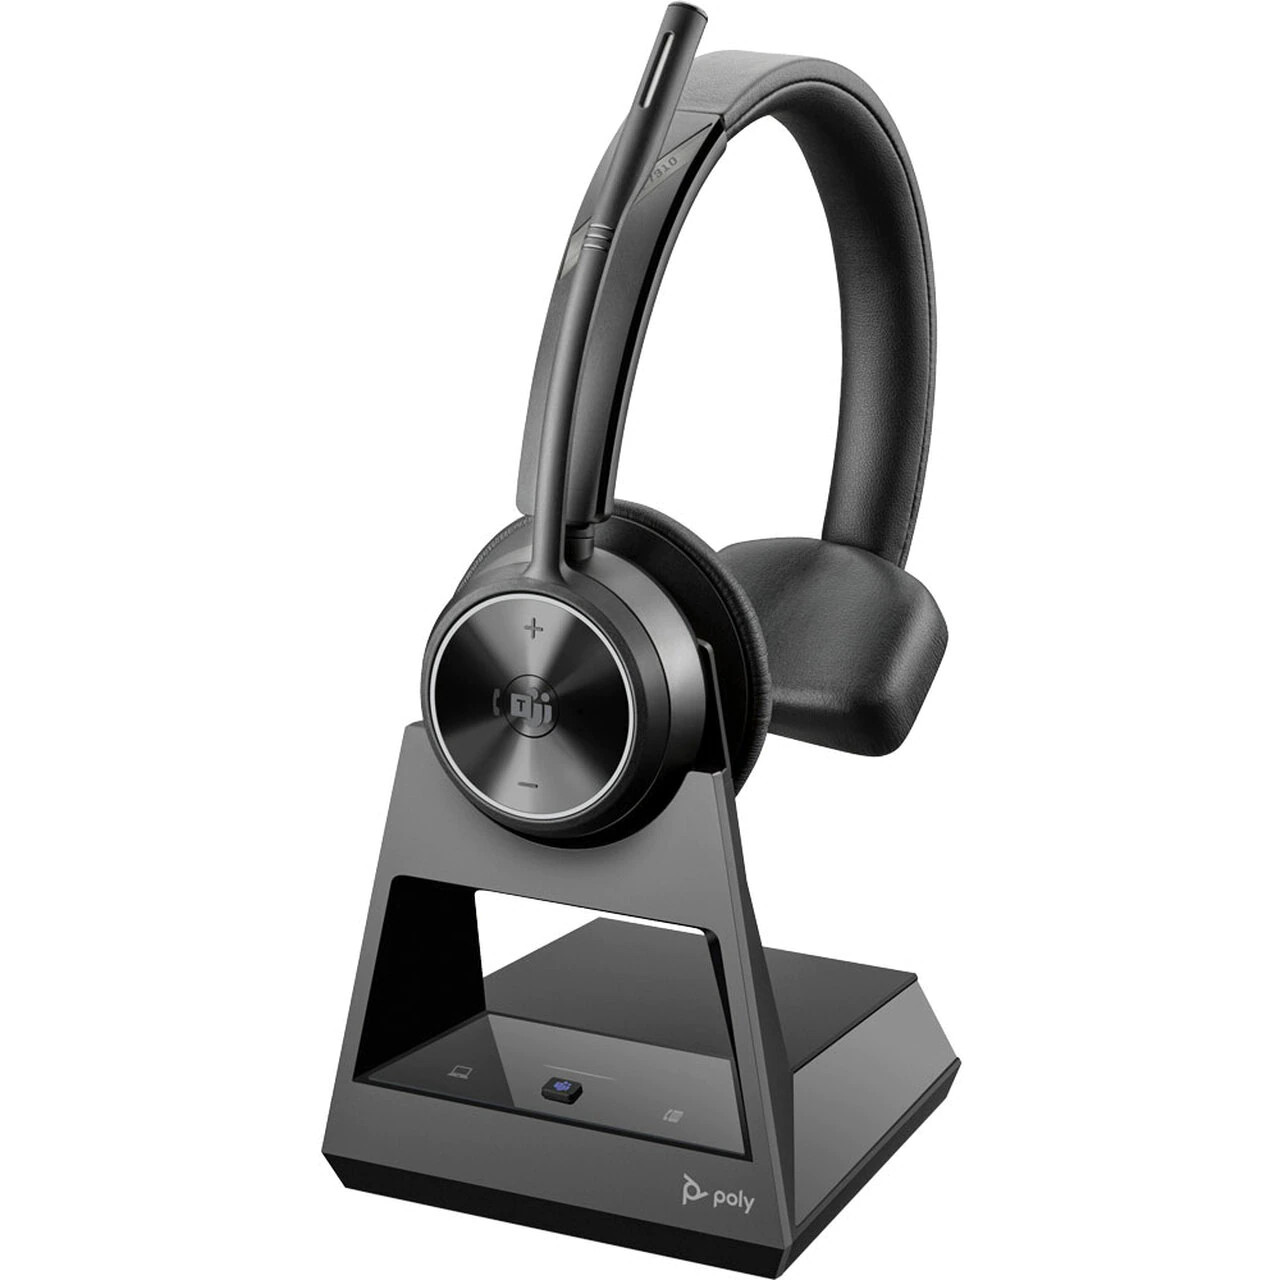 poly savi 7310 office wireless headset mono, deskphone and pc icon view